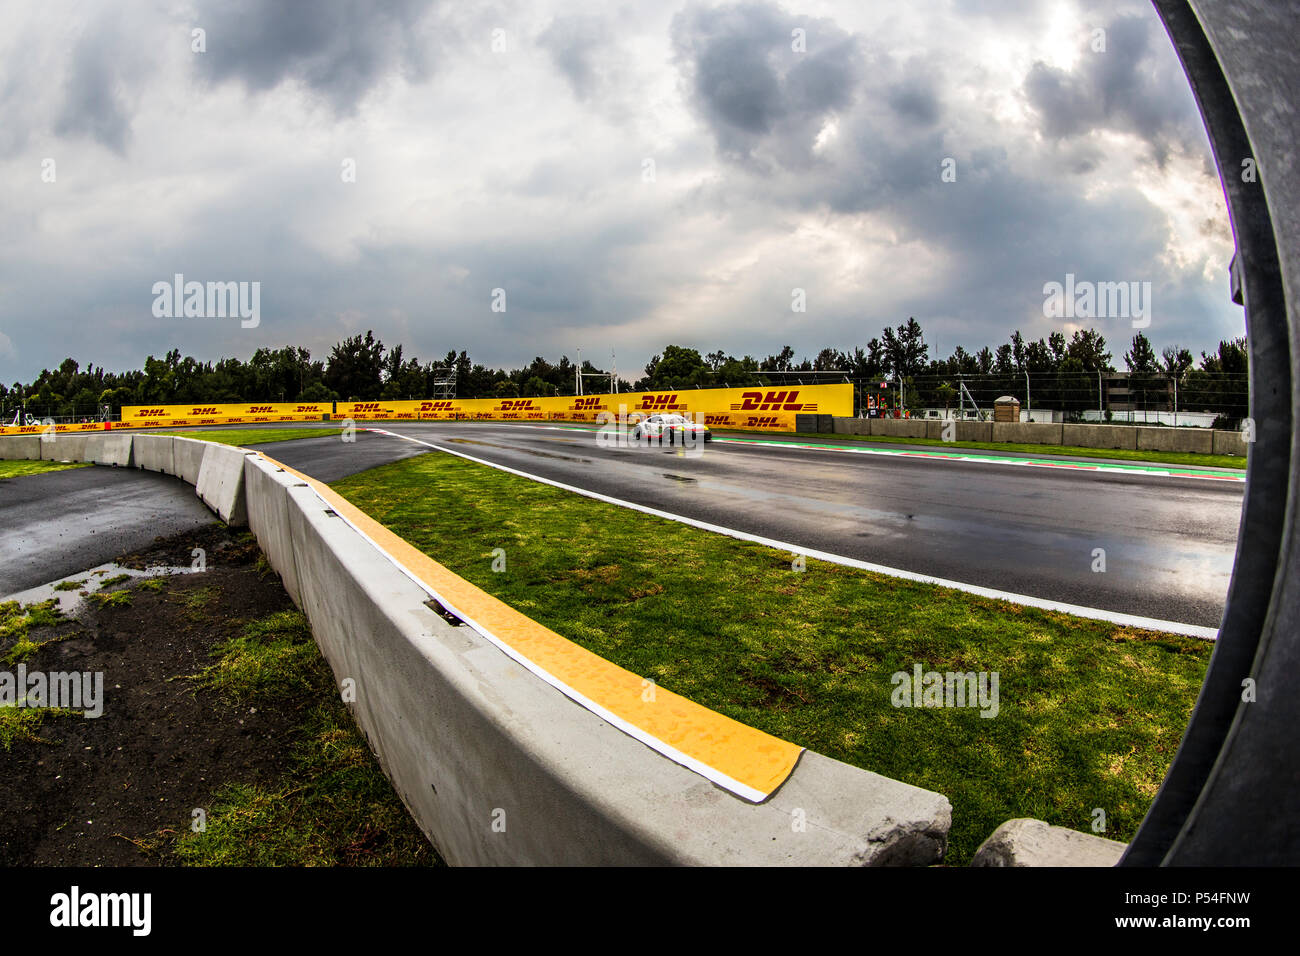 Mexico City, Mexico – September 01, 2017: Autodromo Hermanos Rodriguez. 6hrs of Mexico, FIA WEC. Free Practice I running. Stock Photo